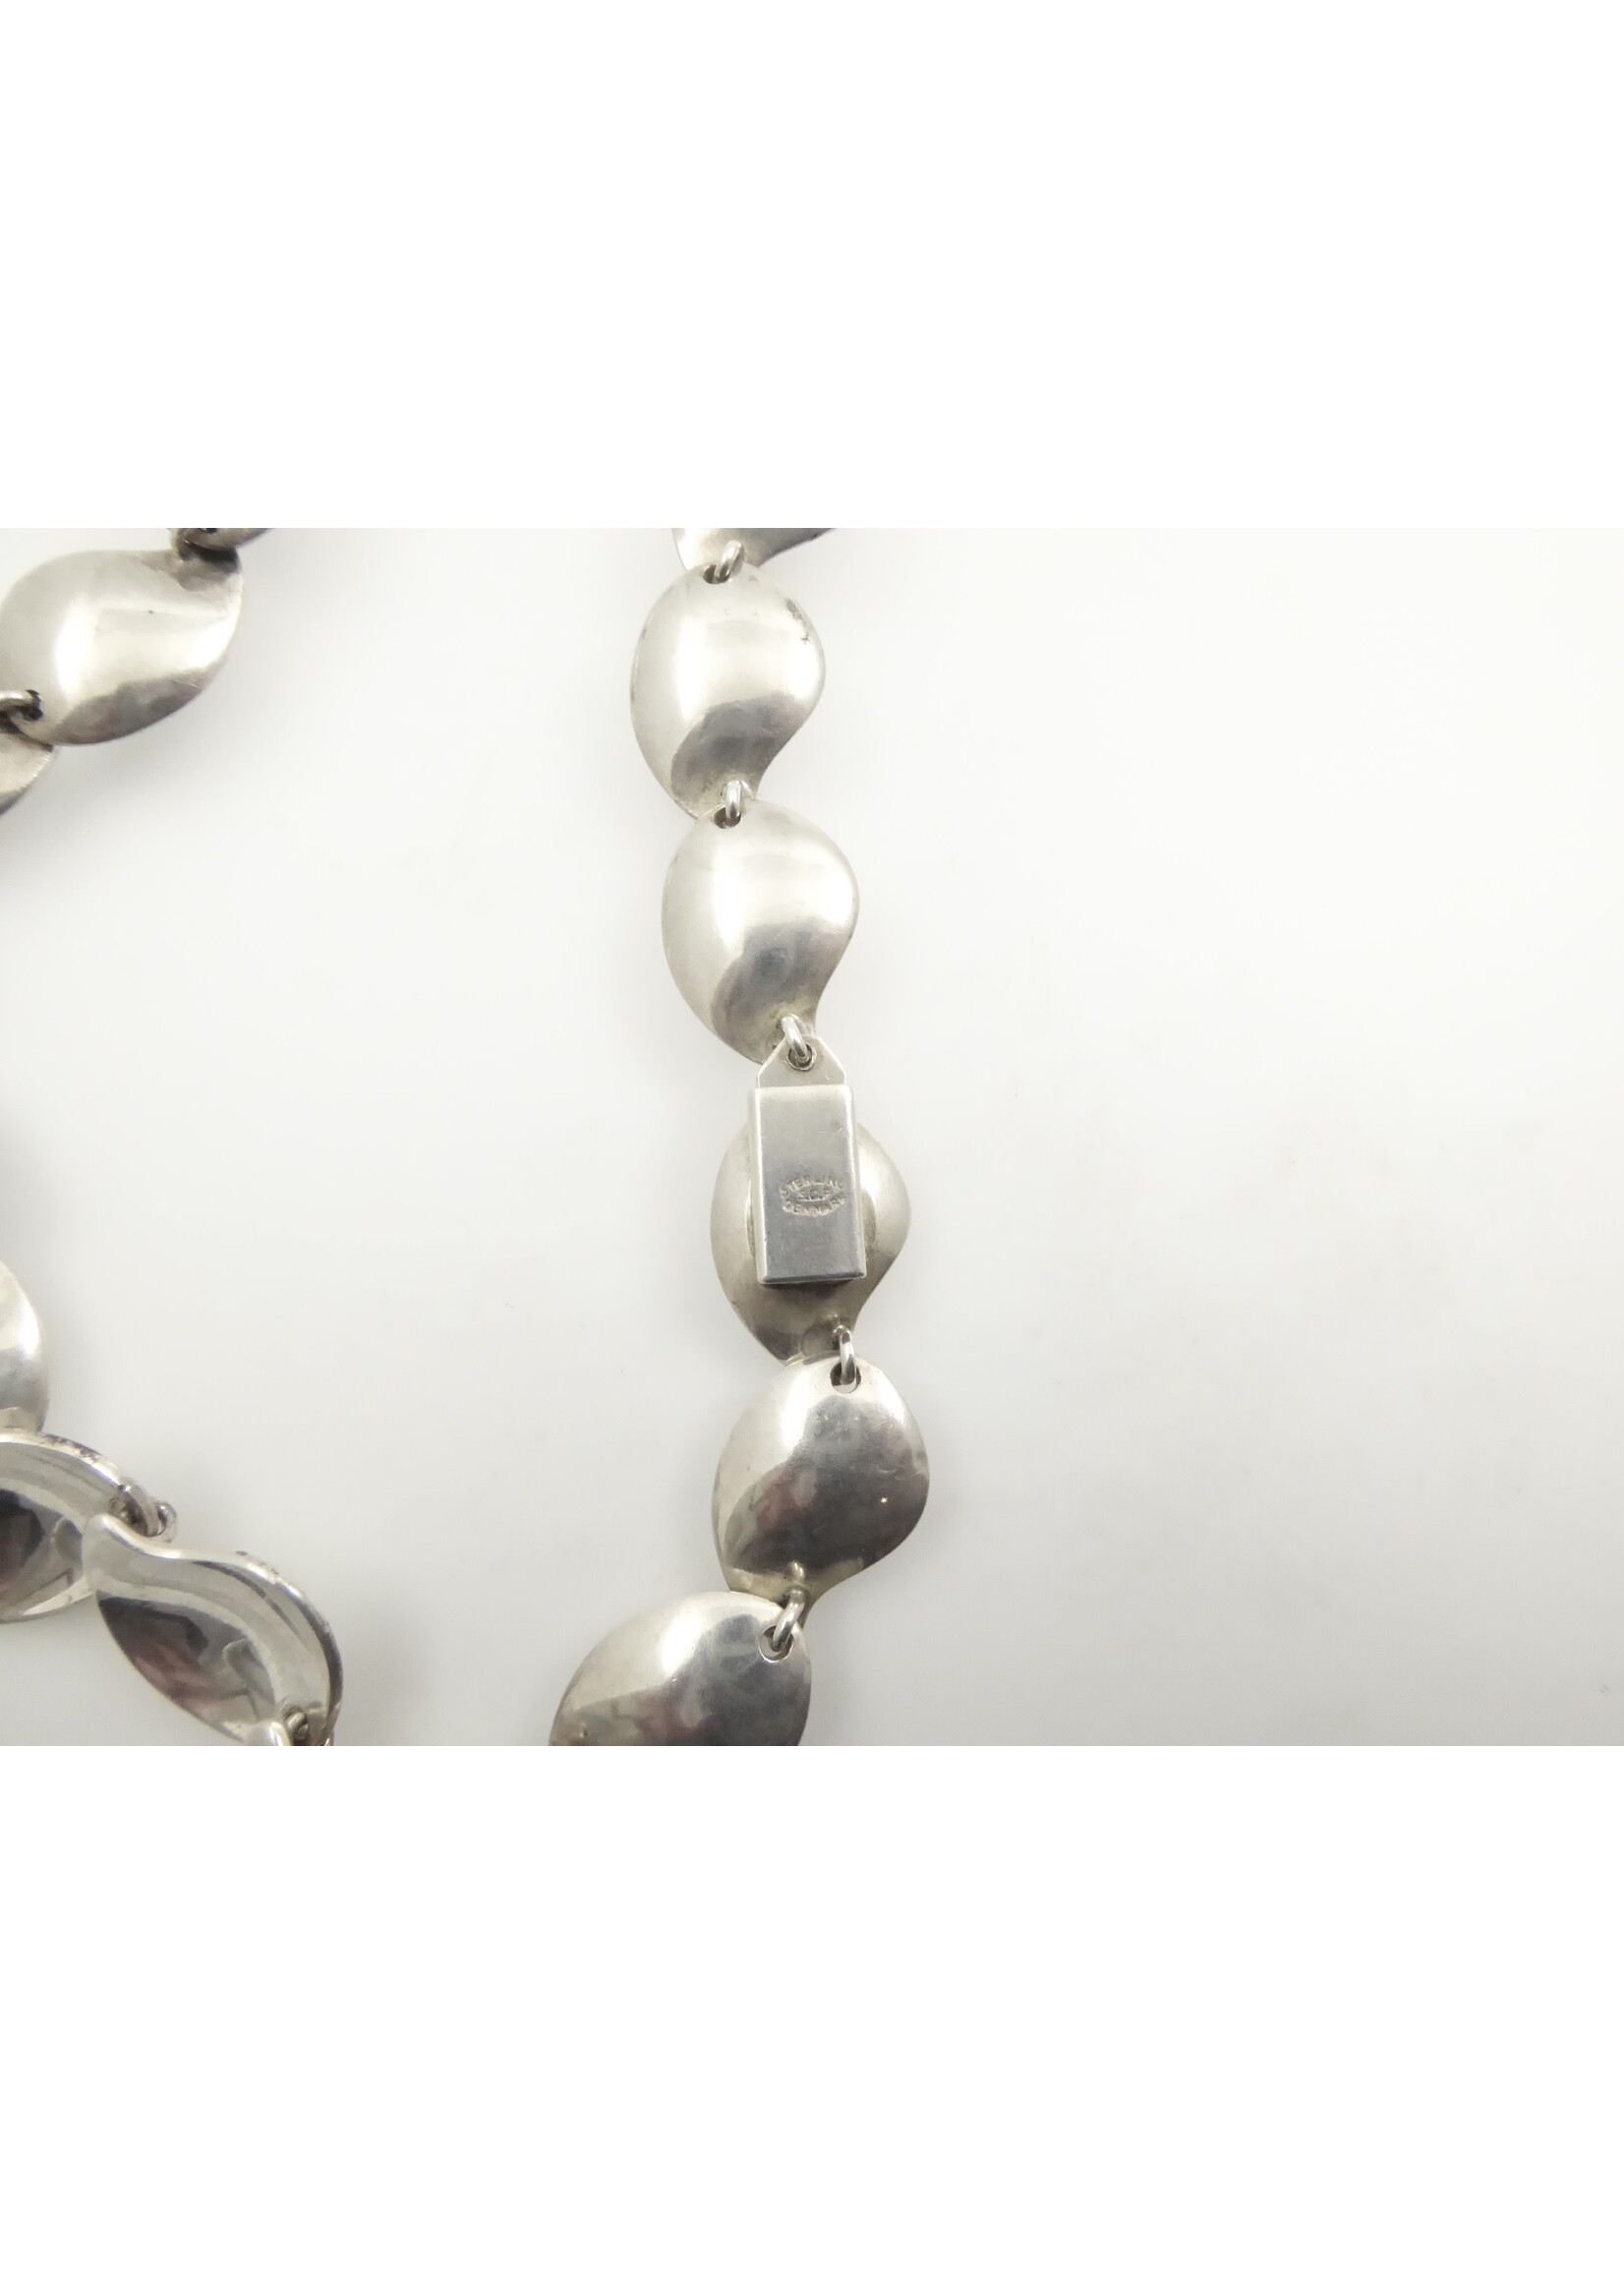 Lisa Kramer Vintage Jewelry Danish Modernist Silver Choker